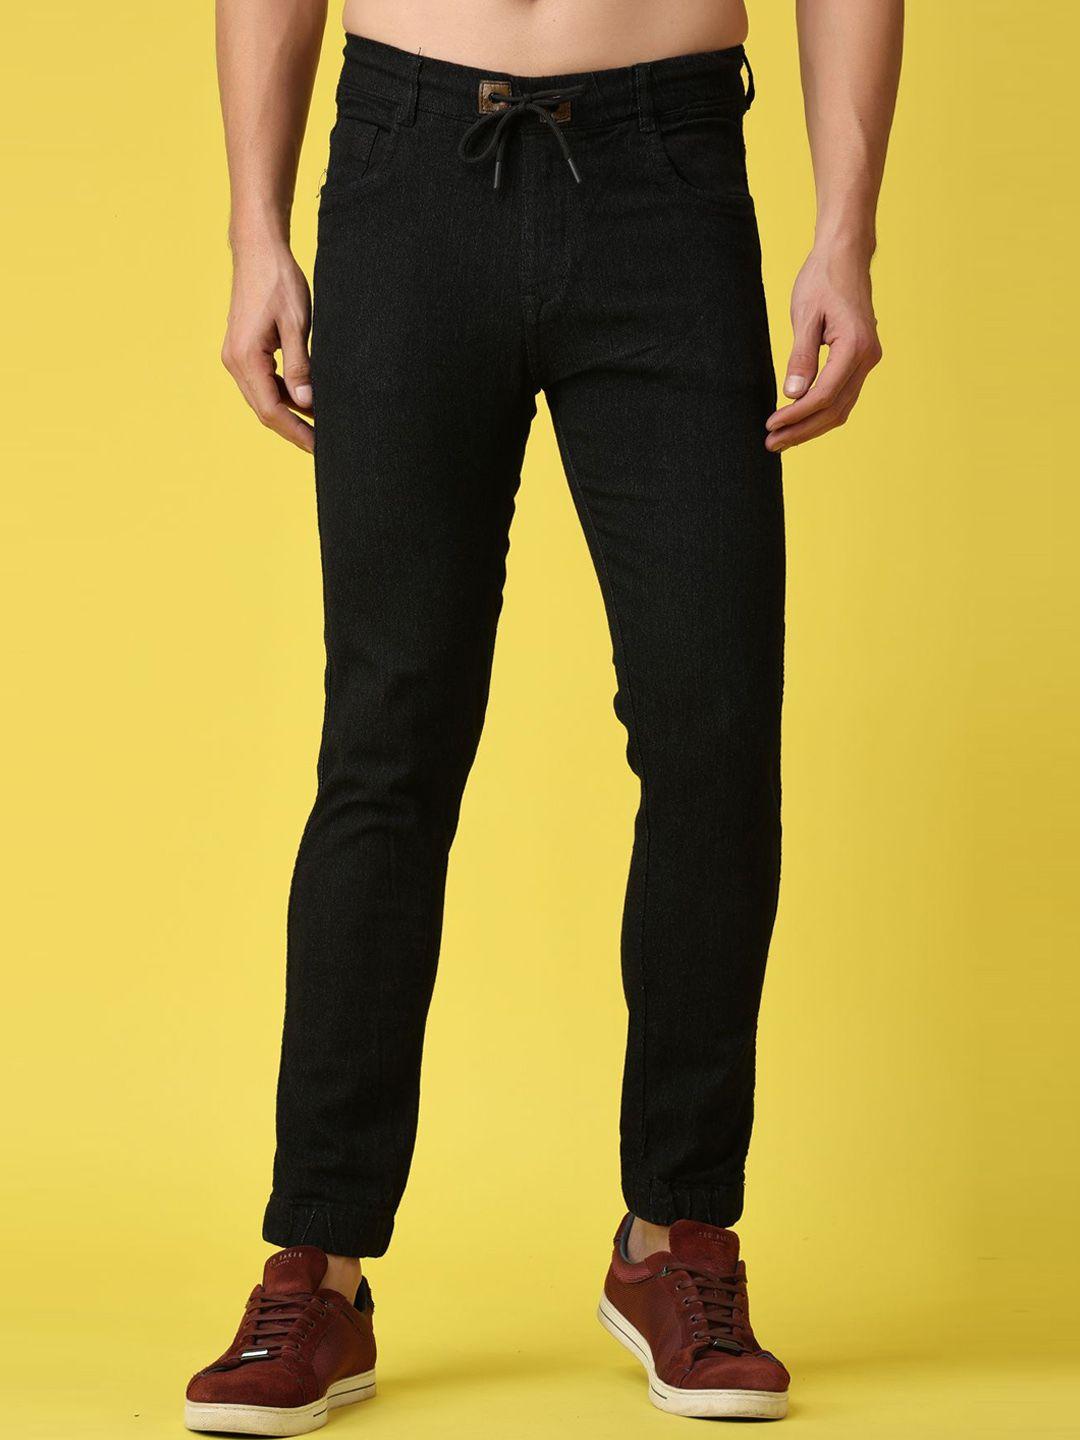 xee men black comfort stretchable jeans